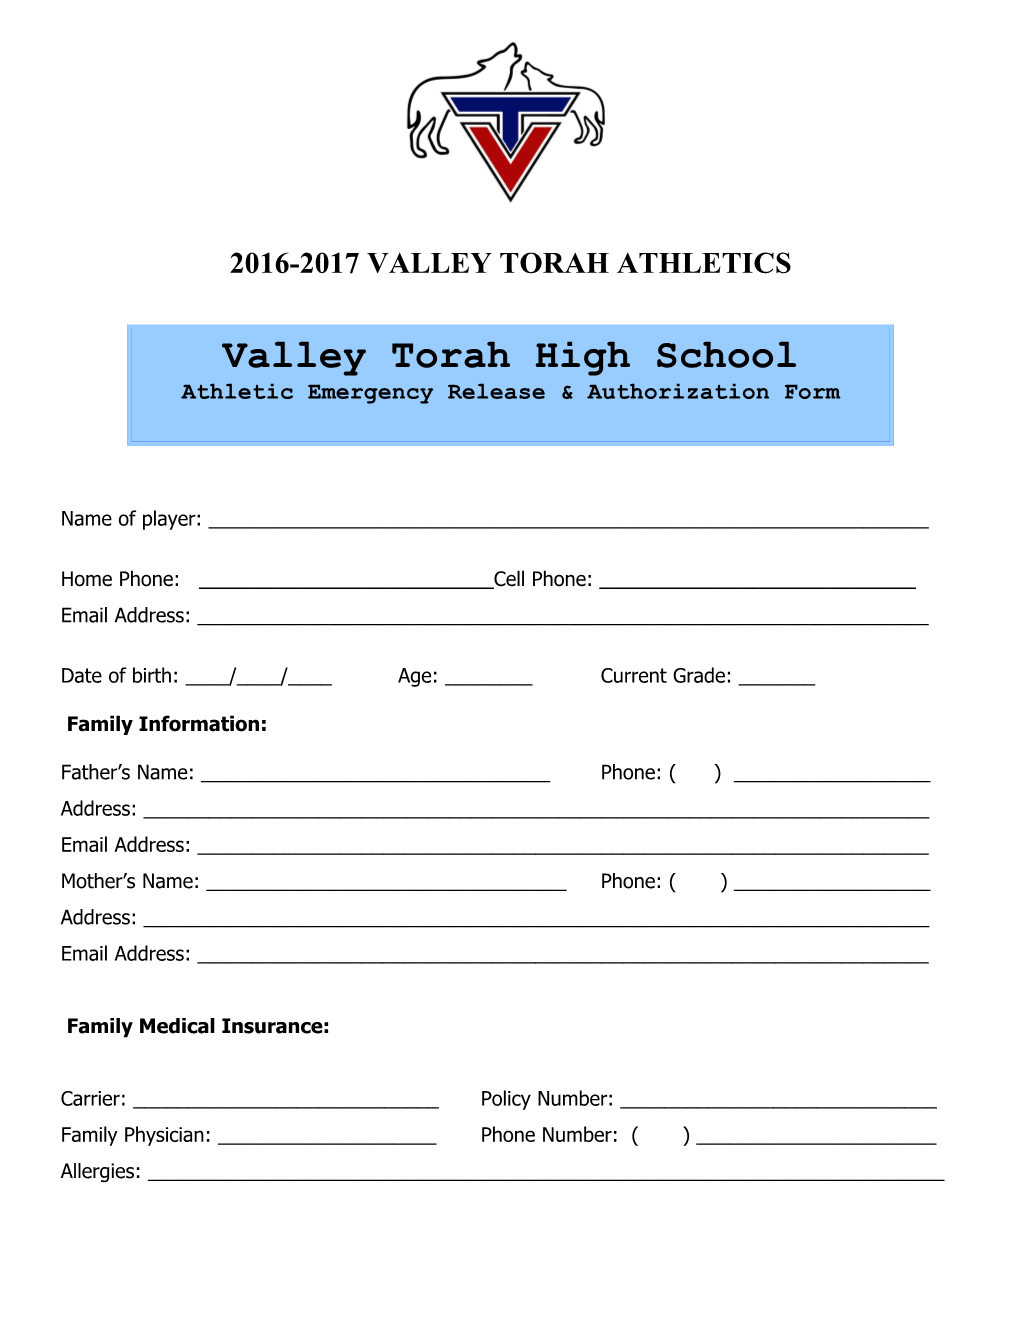 2016-2017Valley Torah Athletics